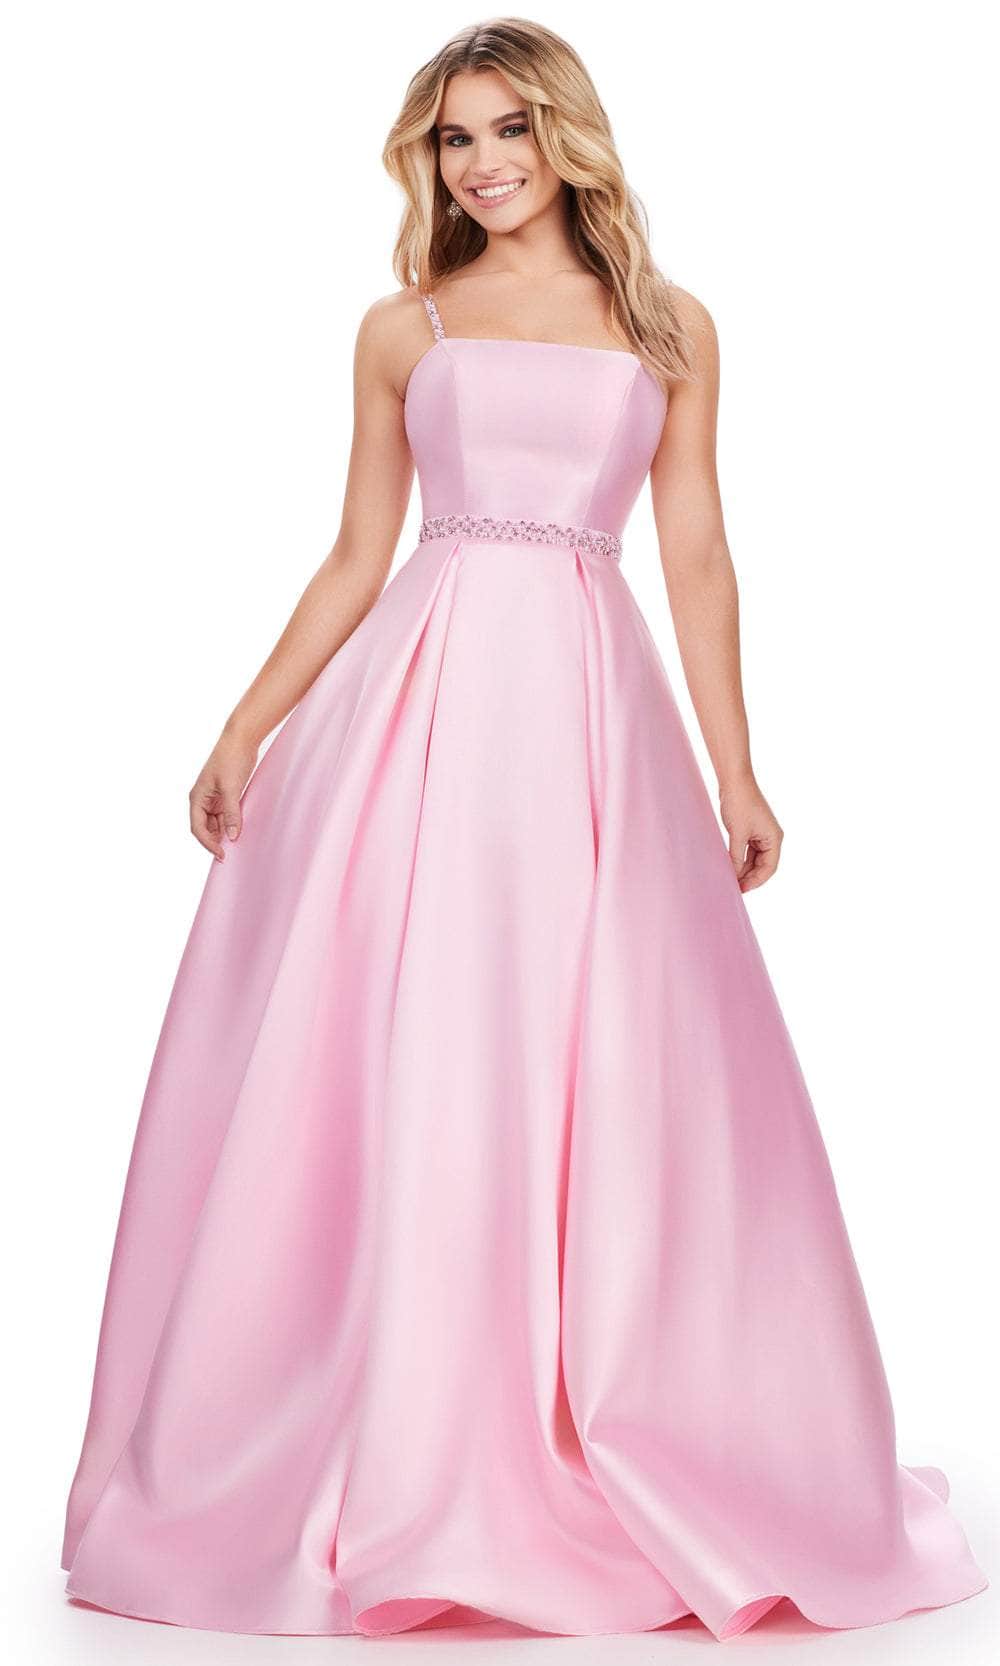 Image of Ashley Lauren 11540 - Satin A-Line Prom Dress